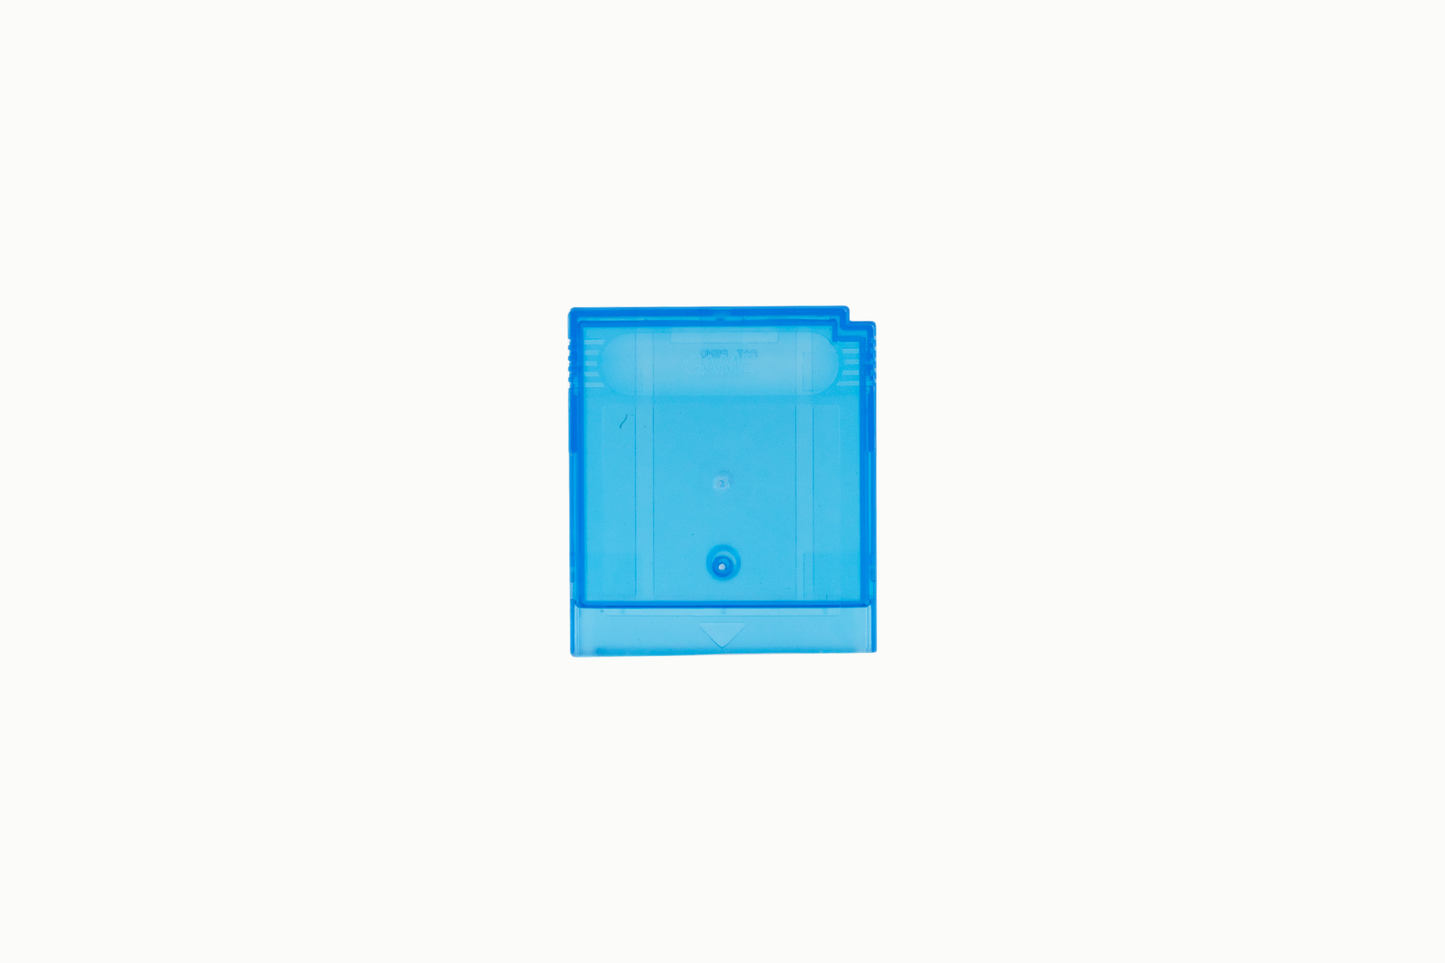 Flash Cartridge for Game Boy - 512KB